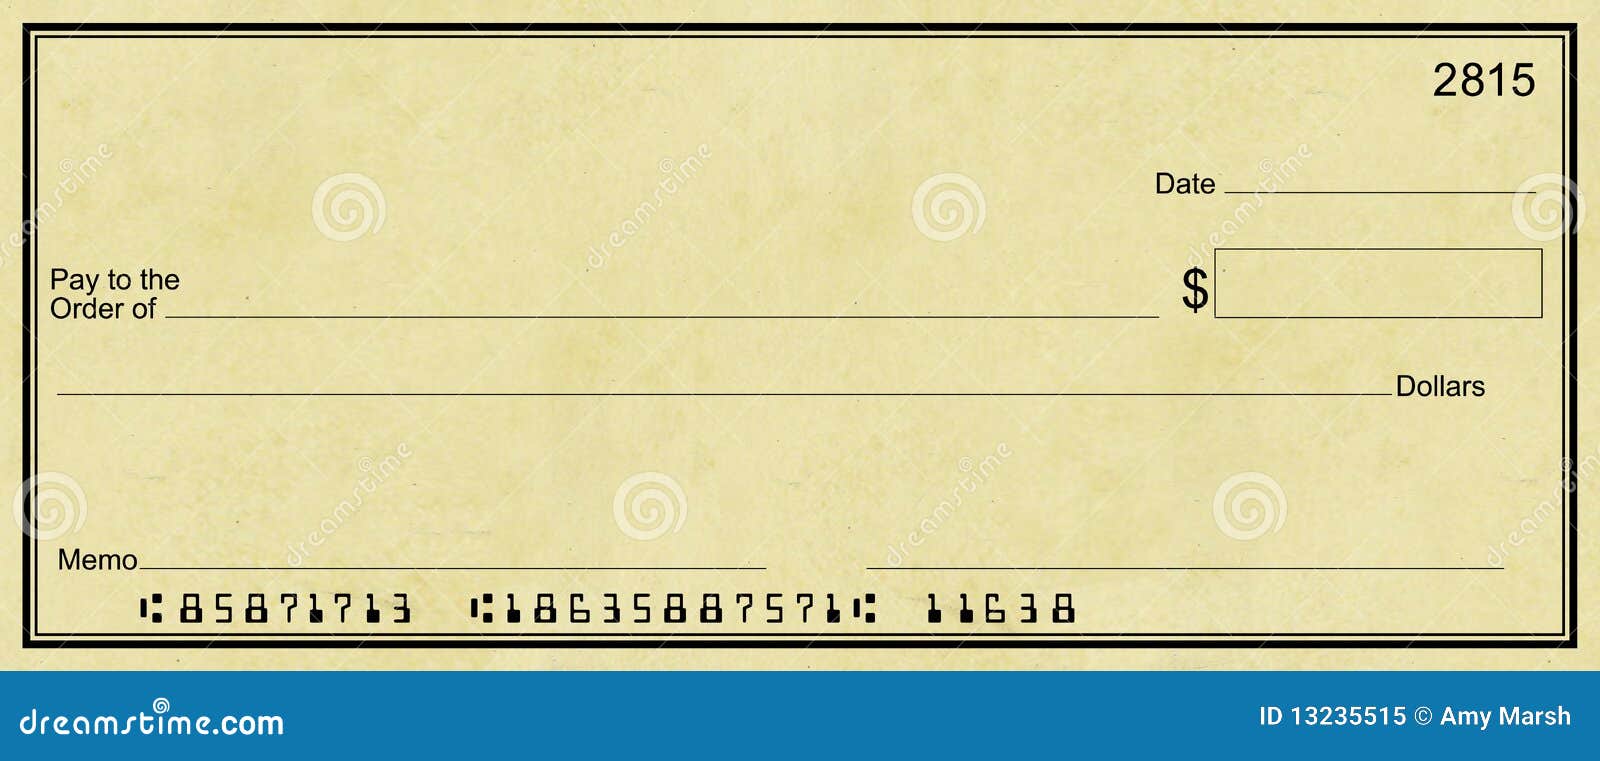 free clip art of bank check - photo #32